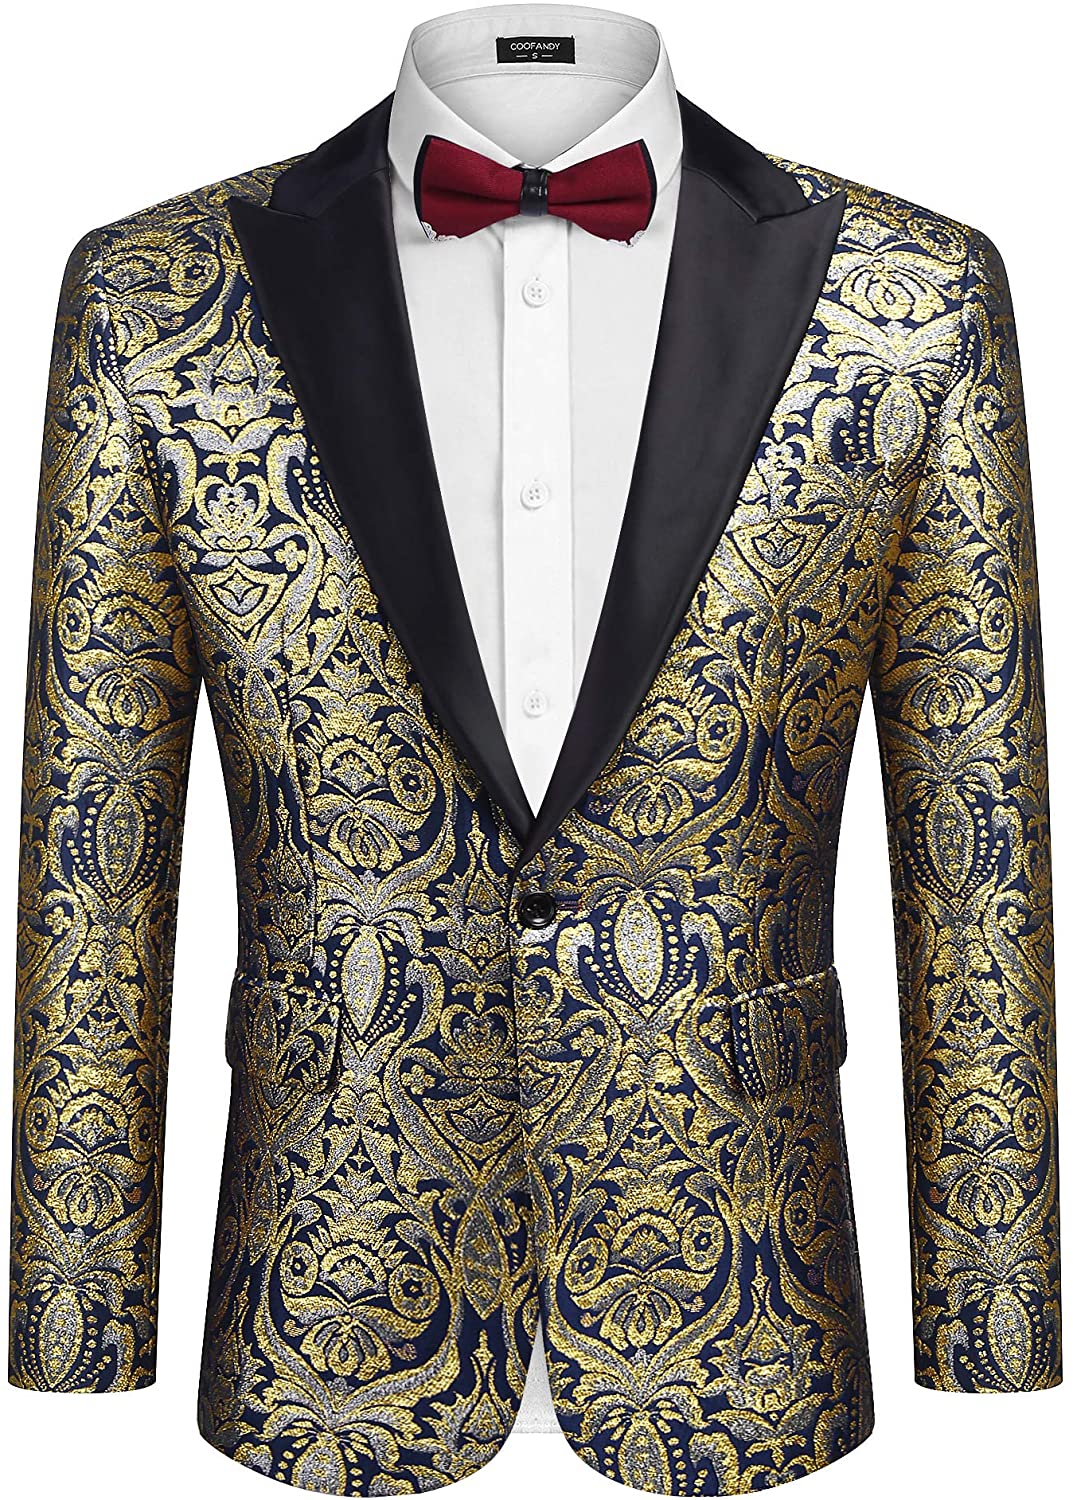 COOFANDY Men Tuxedo Floral Party Blazer Suit Jacket Dinner Prom Wedding Stylish 